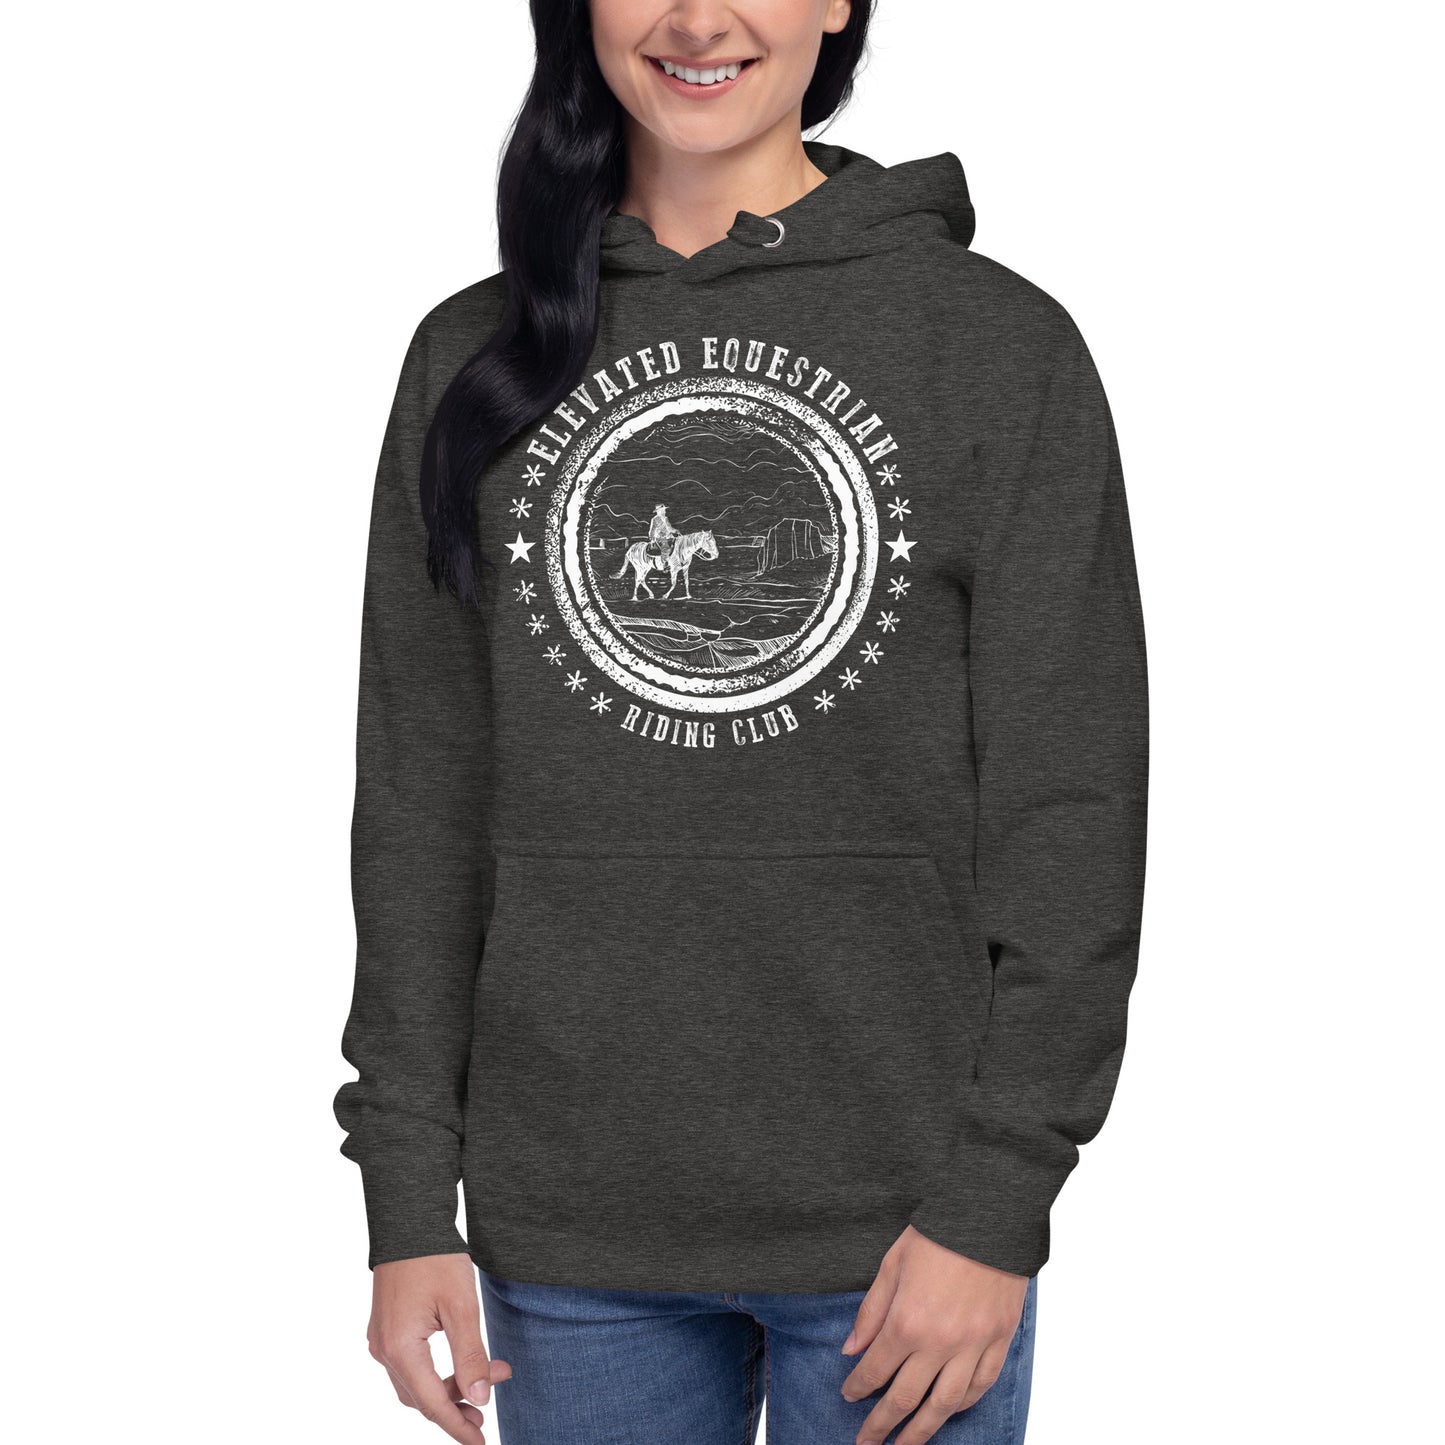 Elevated Equestrian Riding Club Charcoal Grey Unisex Hooded Sweatshirt